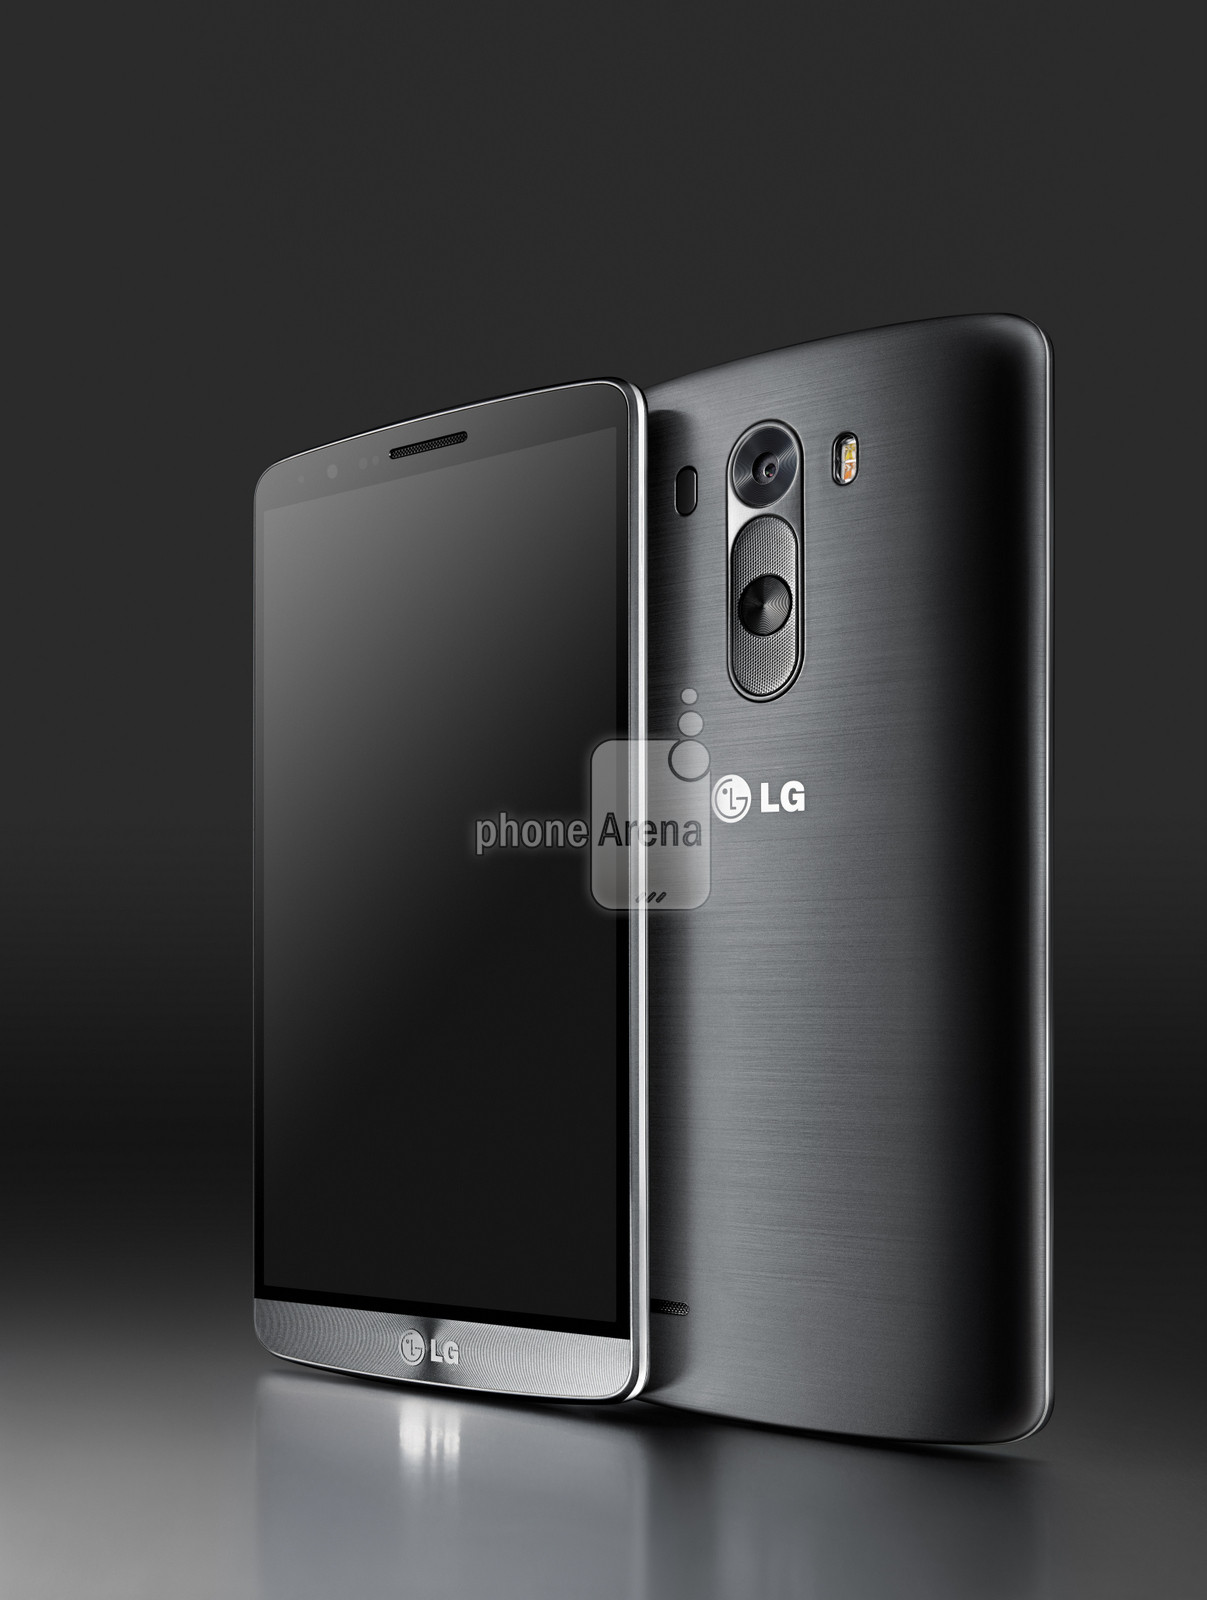 LG G3 press renders appear 3